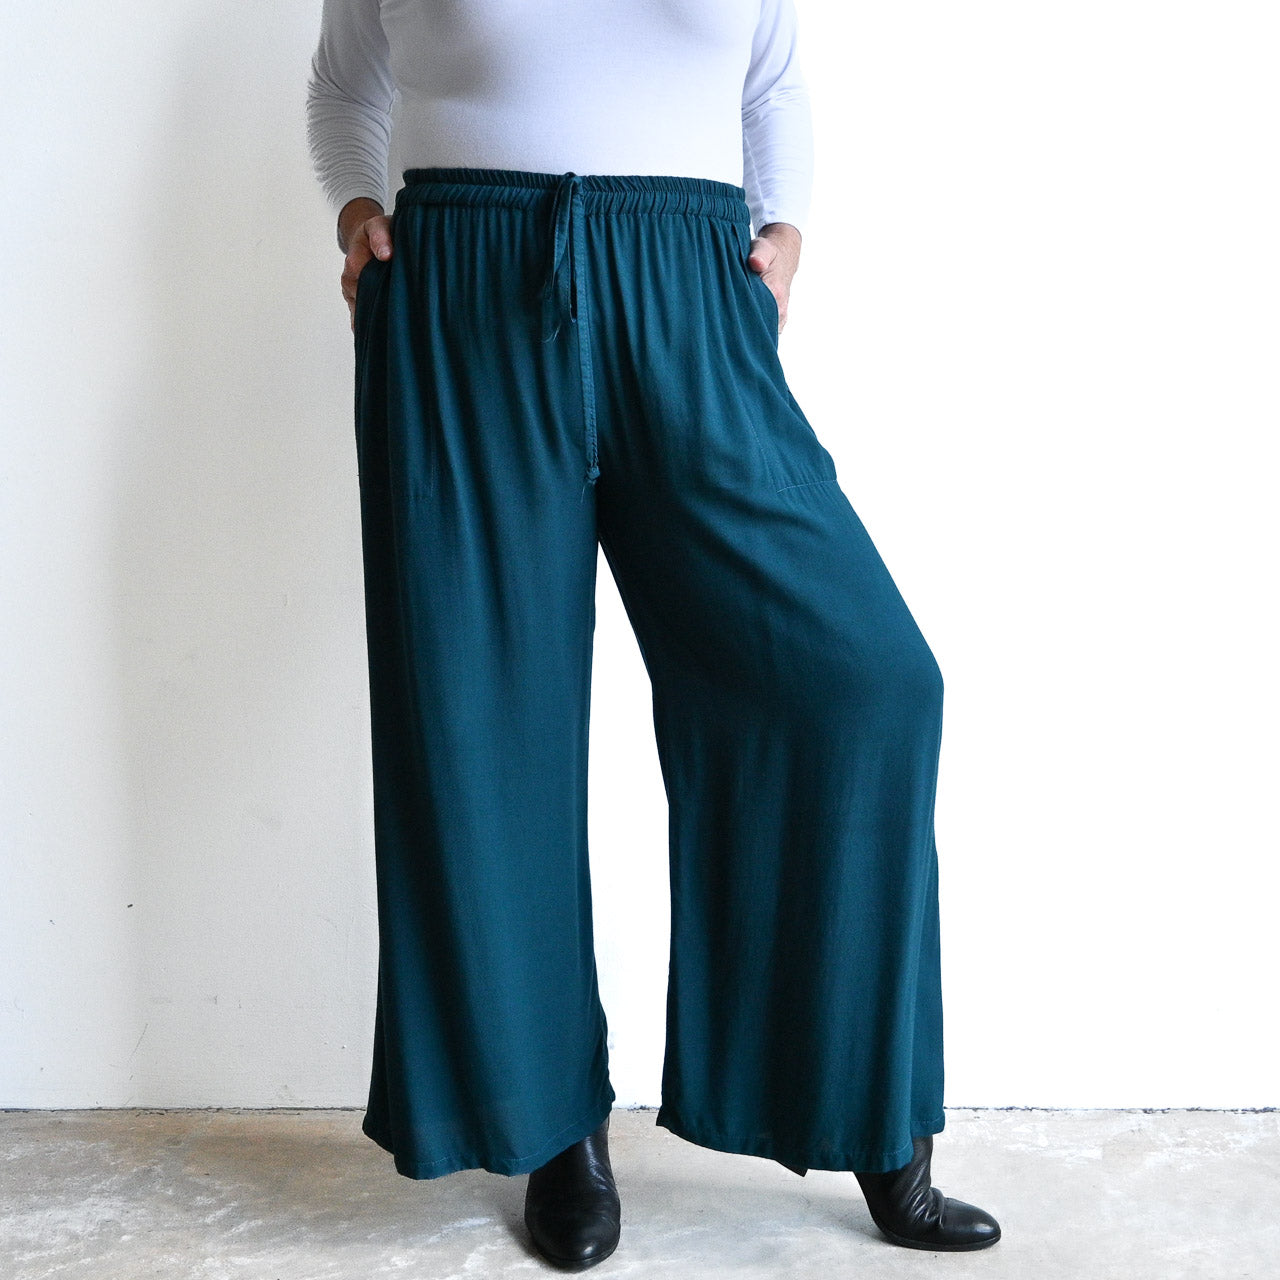 Zen Drawstring Lounge Pants - wide-leg, pull-on trousers - plus